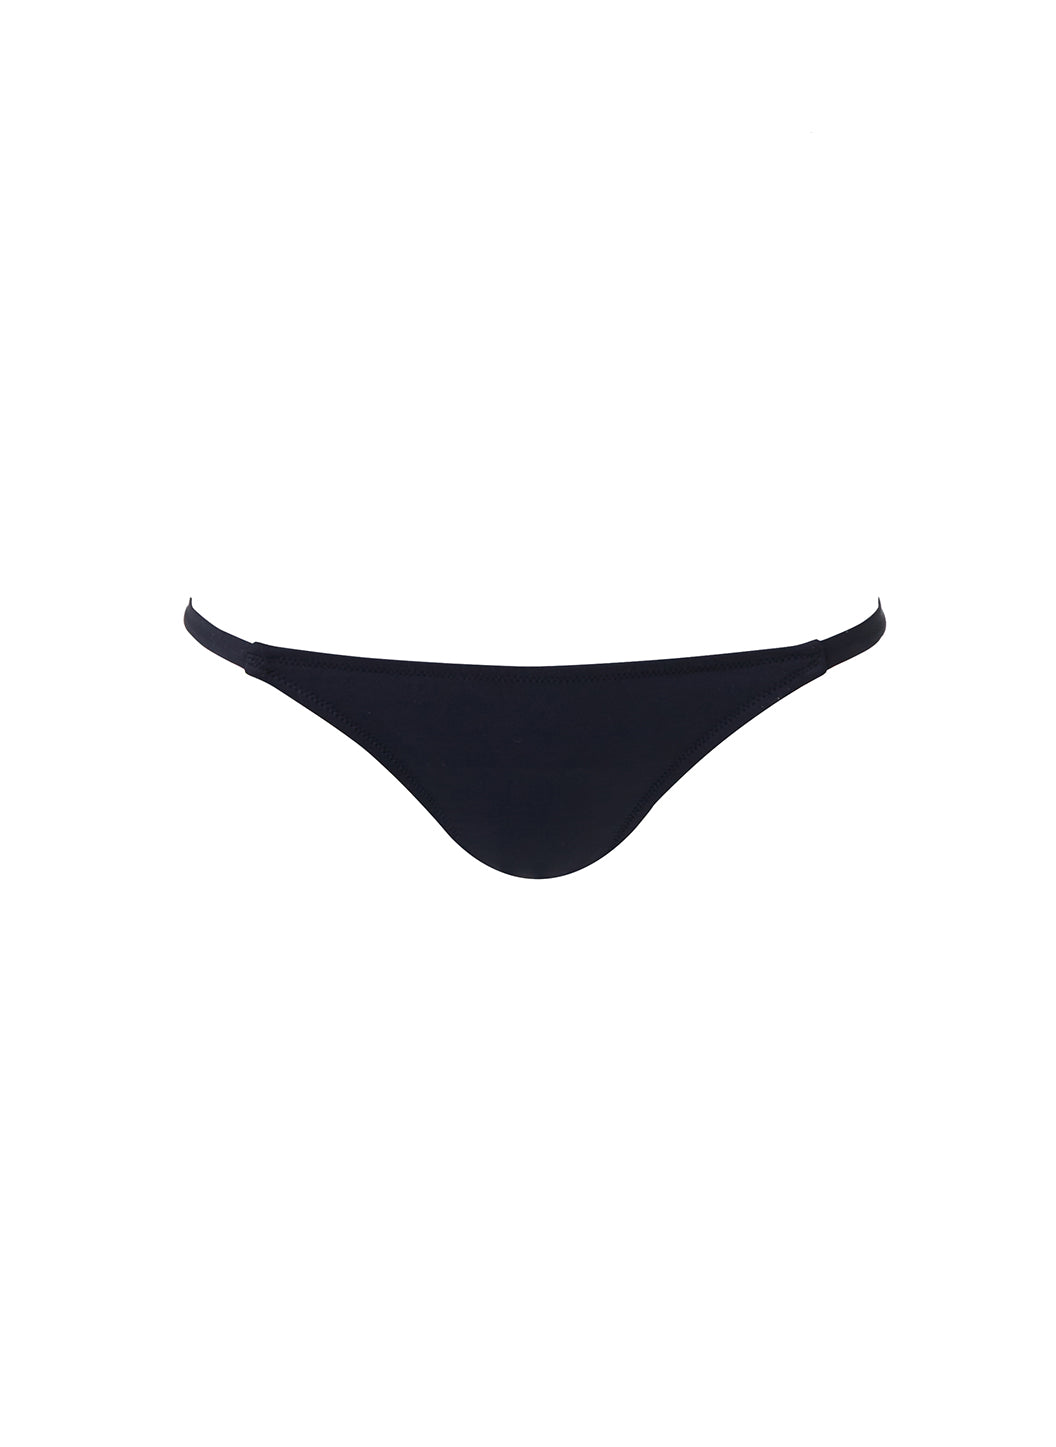 ecuador-black-bikini-bottom_cutout